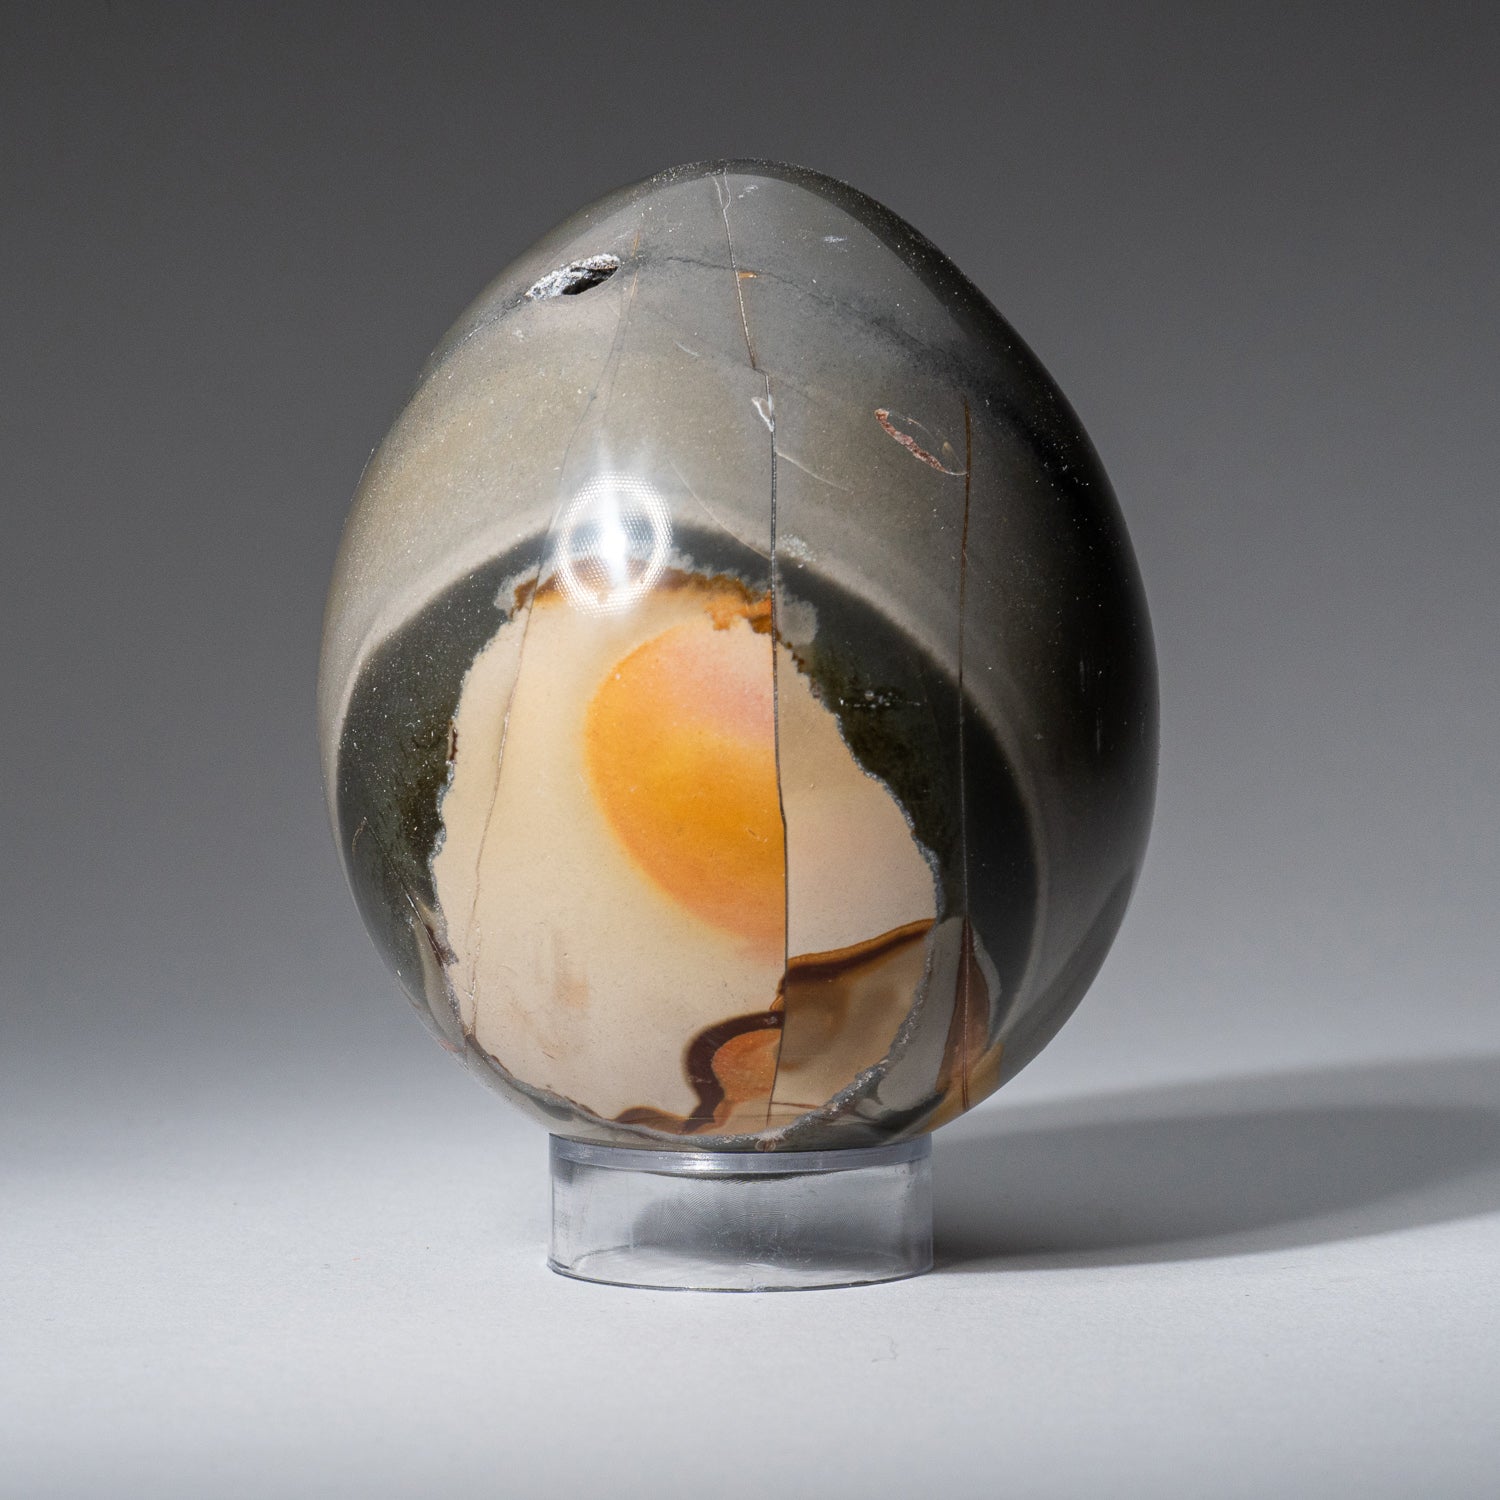 Genuine Polished Polychrome Egg from Madagascar (538.2 grams)